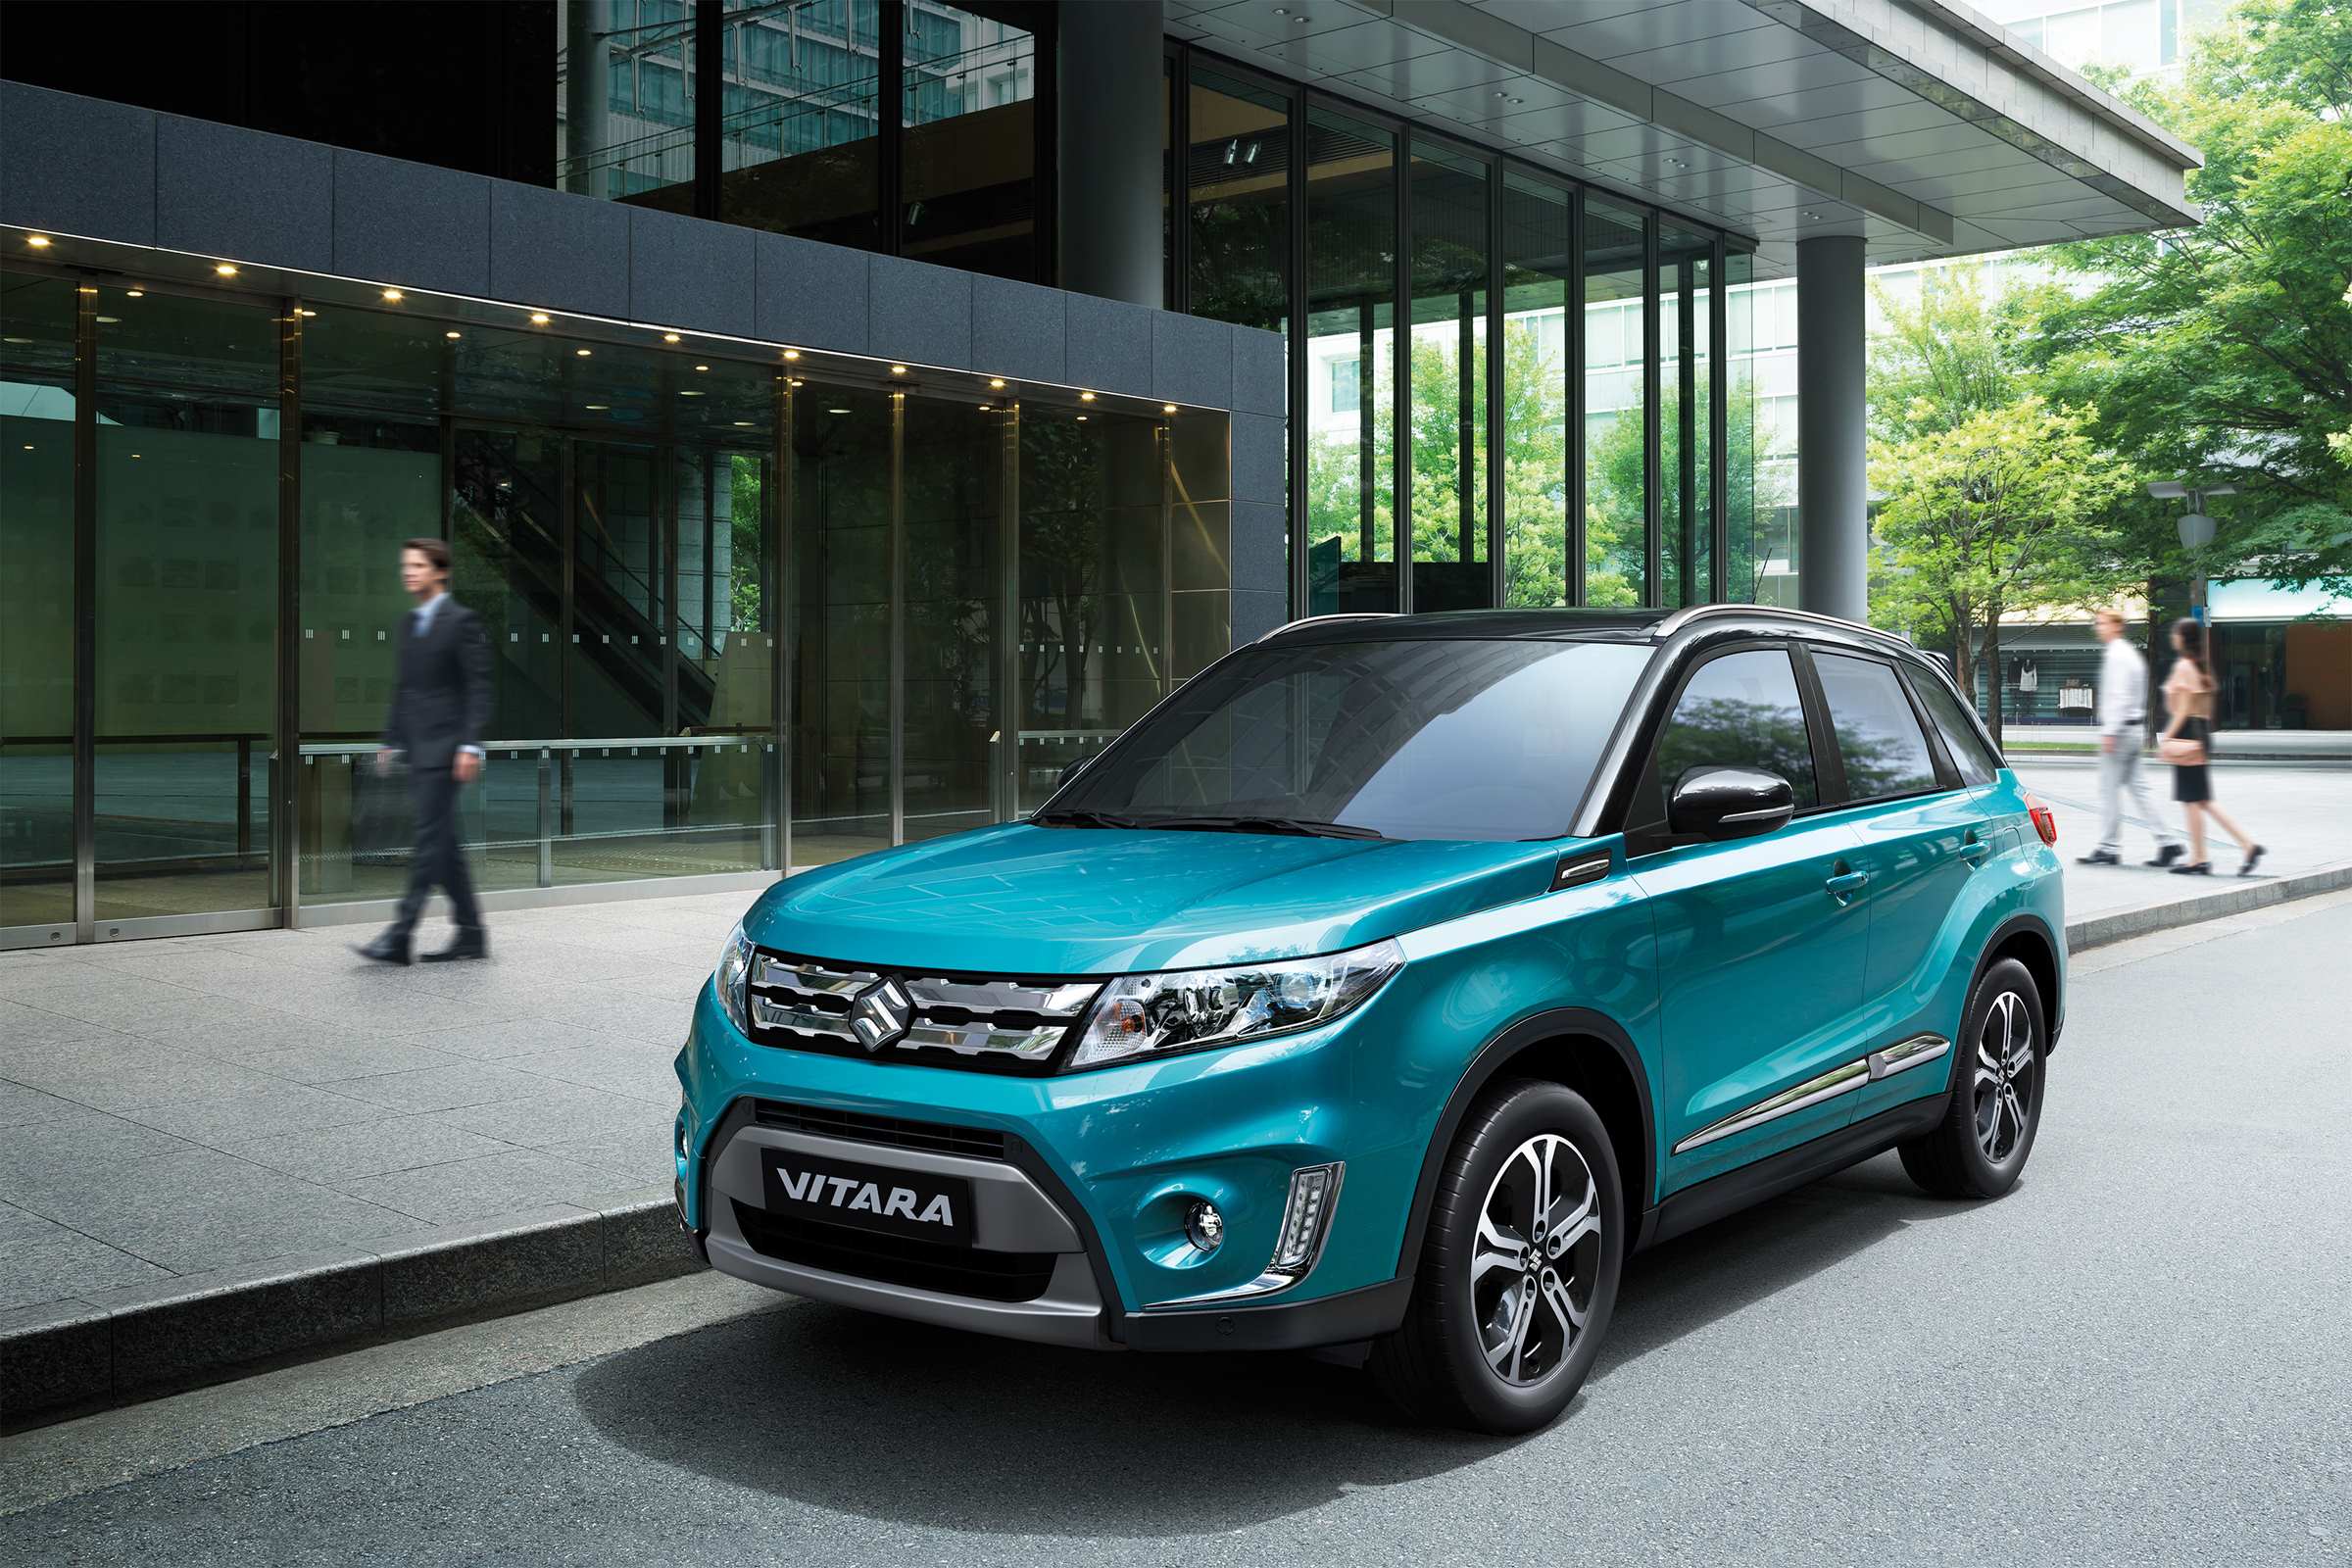 2015 Suzuki New Vitara